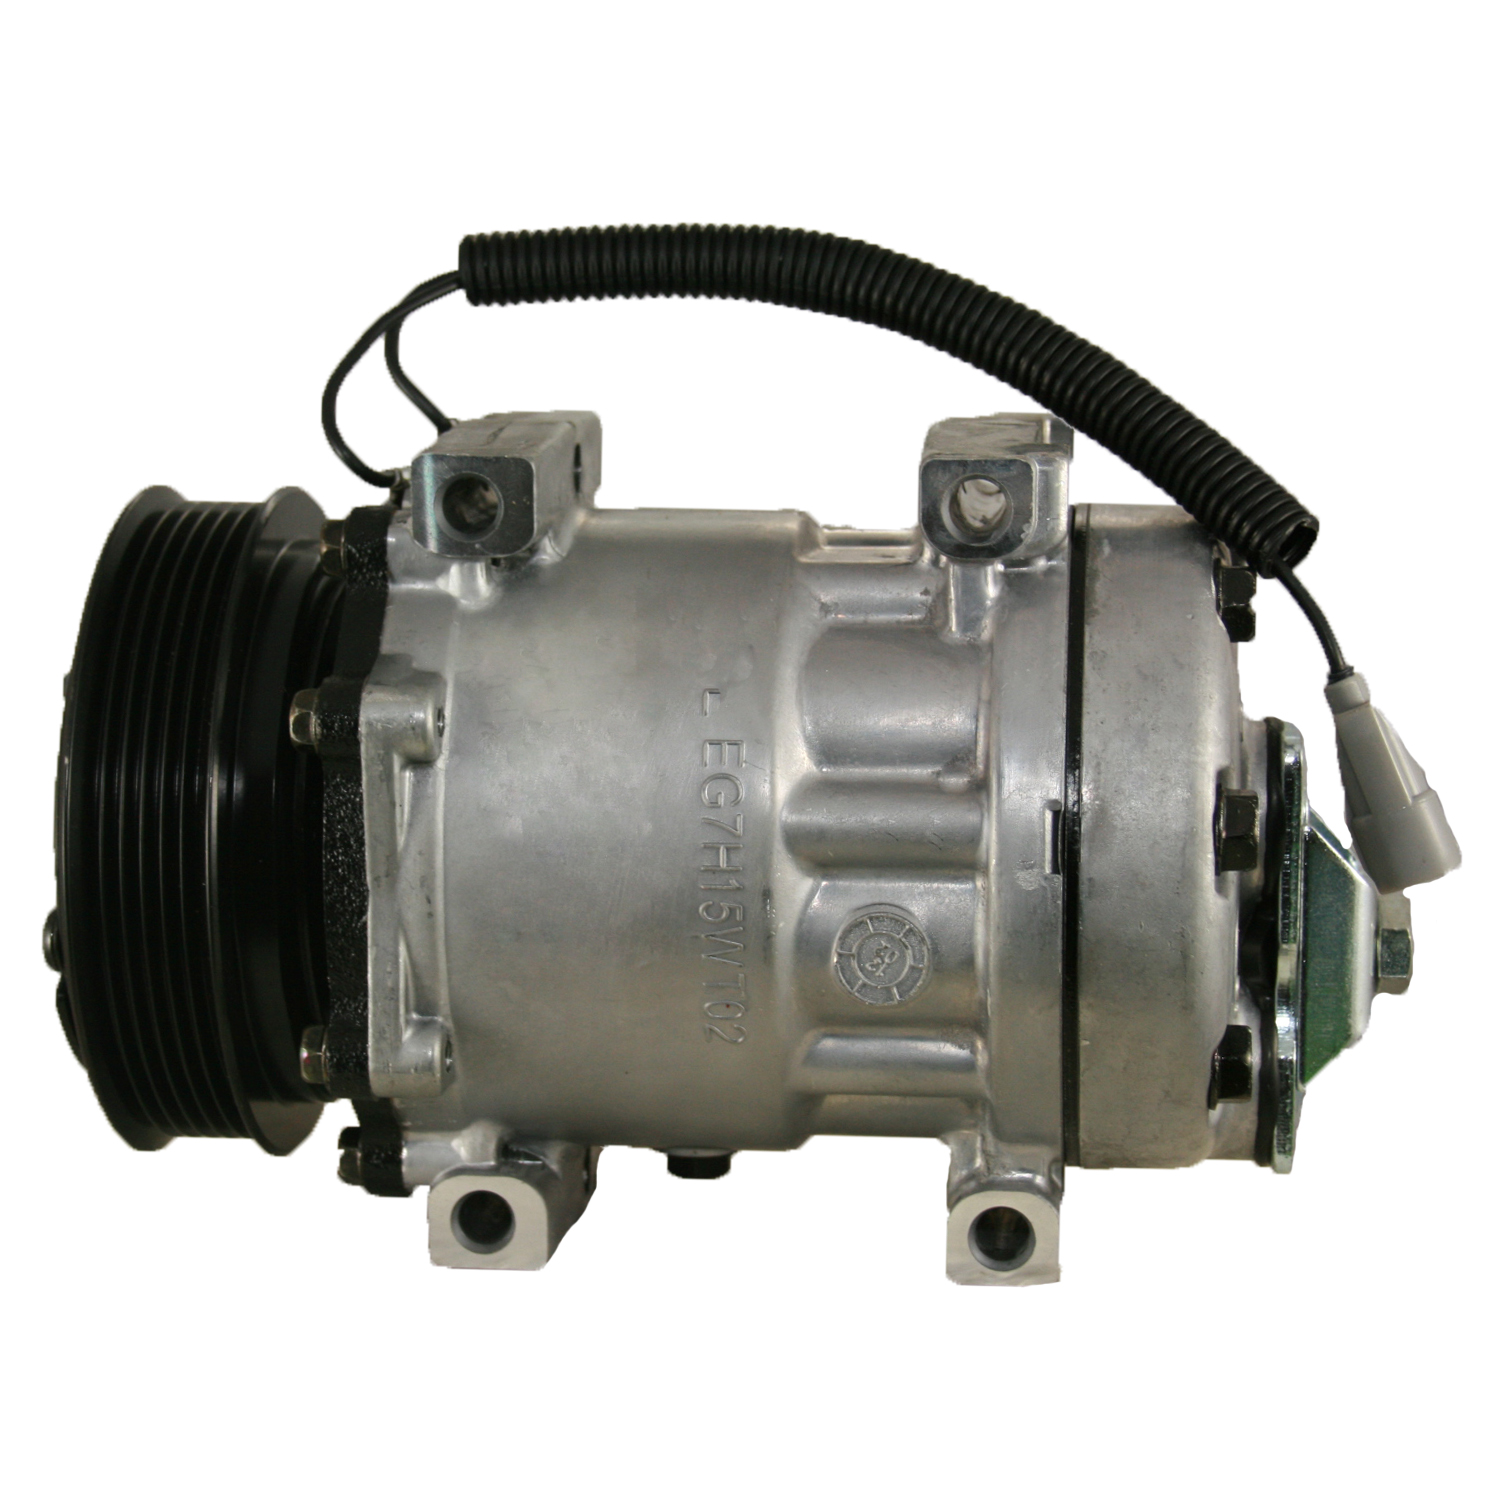 TCW Compressor 40572.601NEW New Product Image field_60b6a13a6e67c